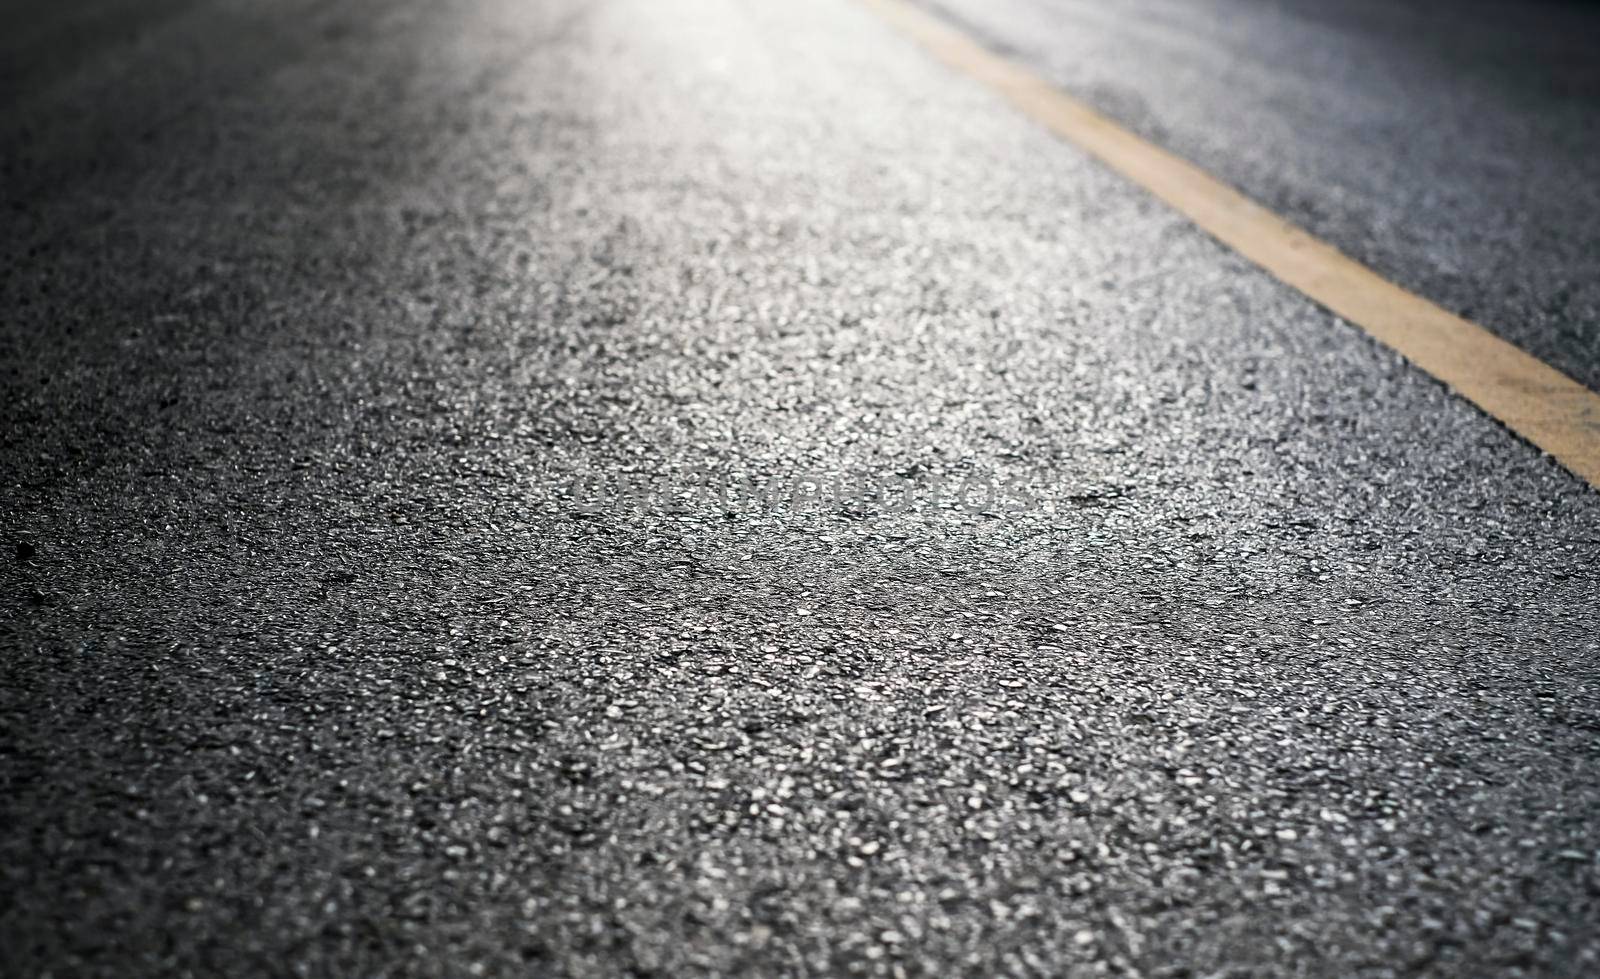 Blank asphalt road with light